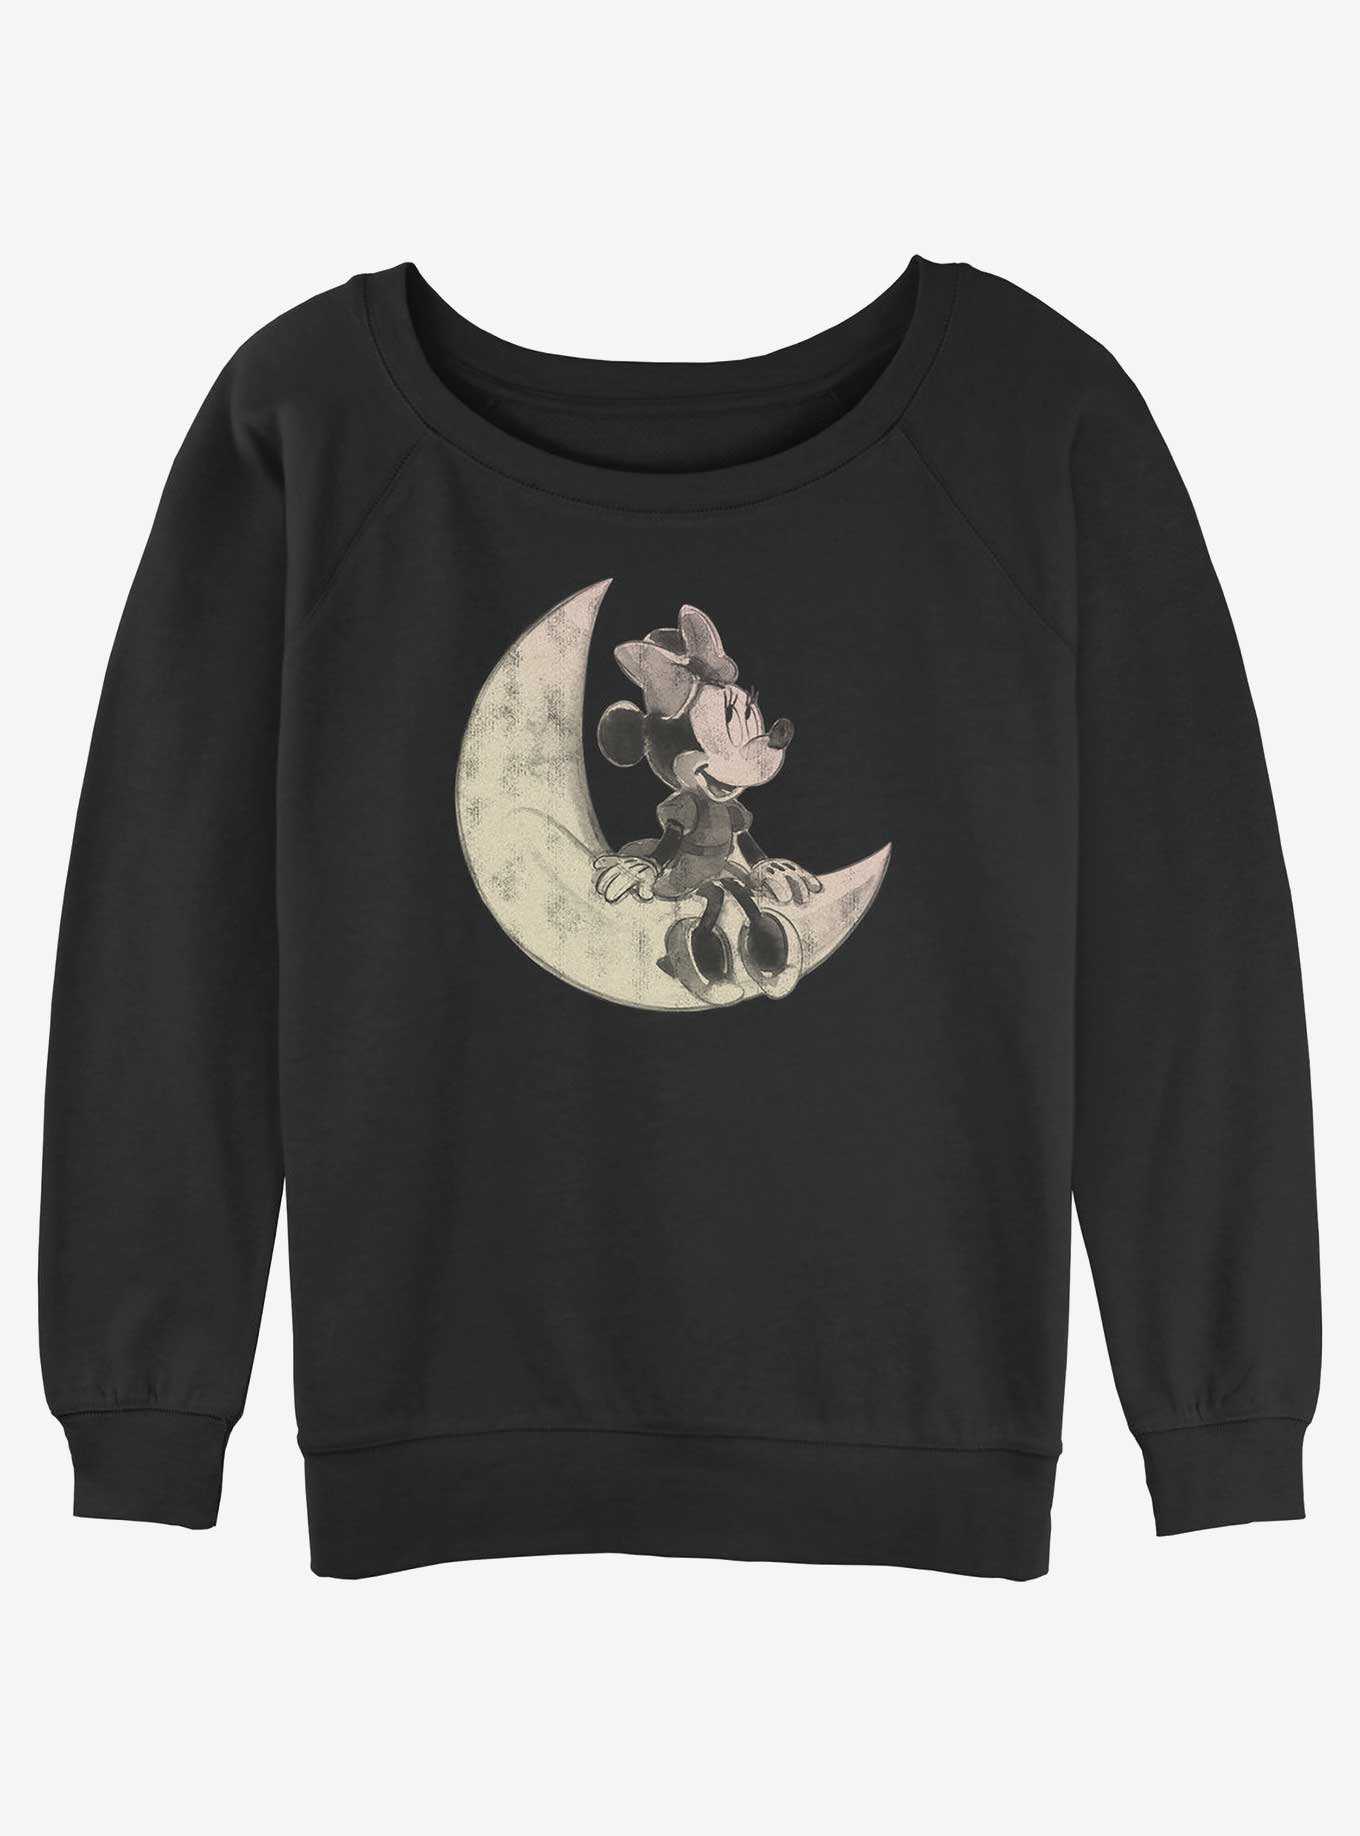 Disney Minnie Mouse On The Moon Girls Slouchy Sweatshirt, , hi-res